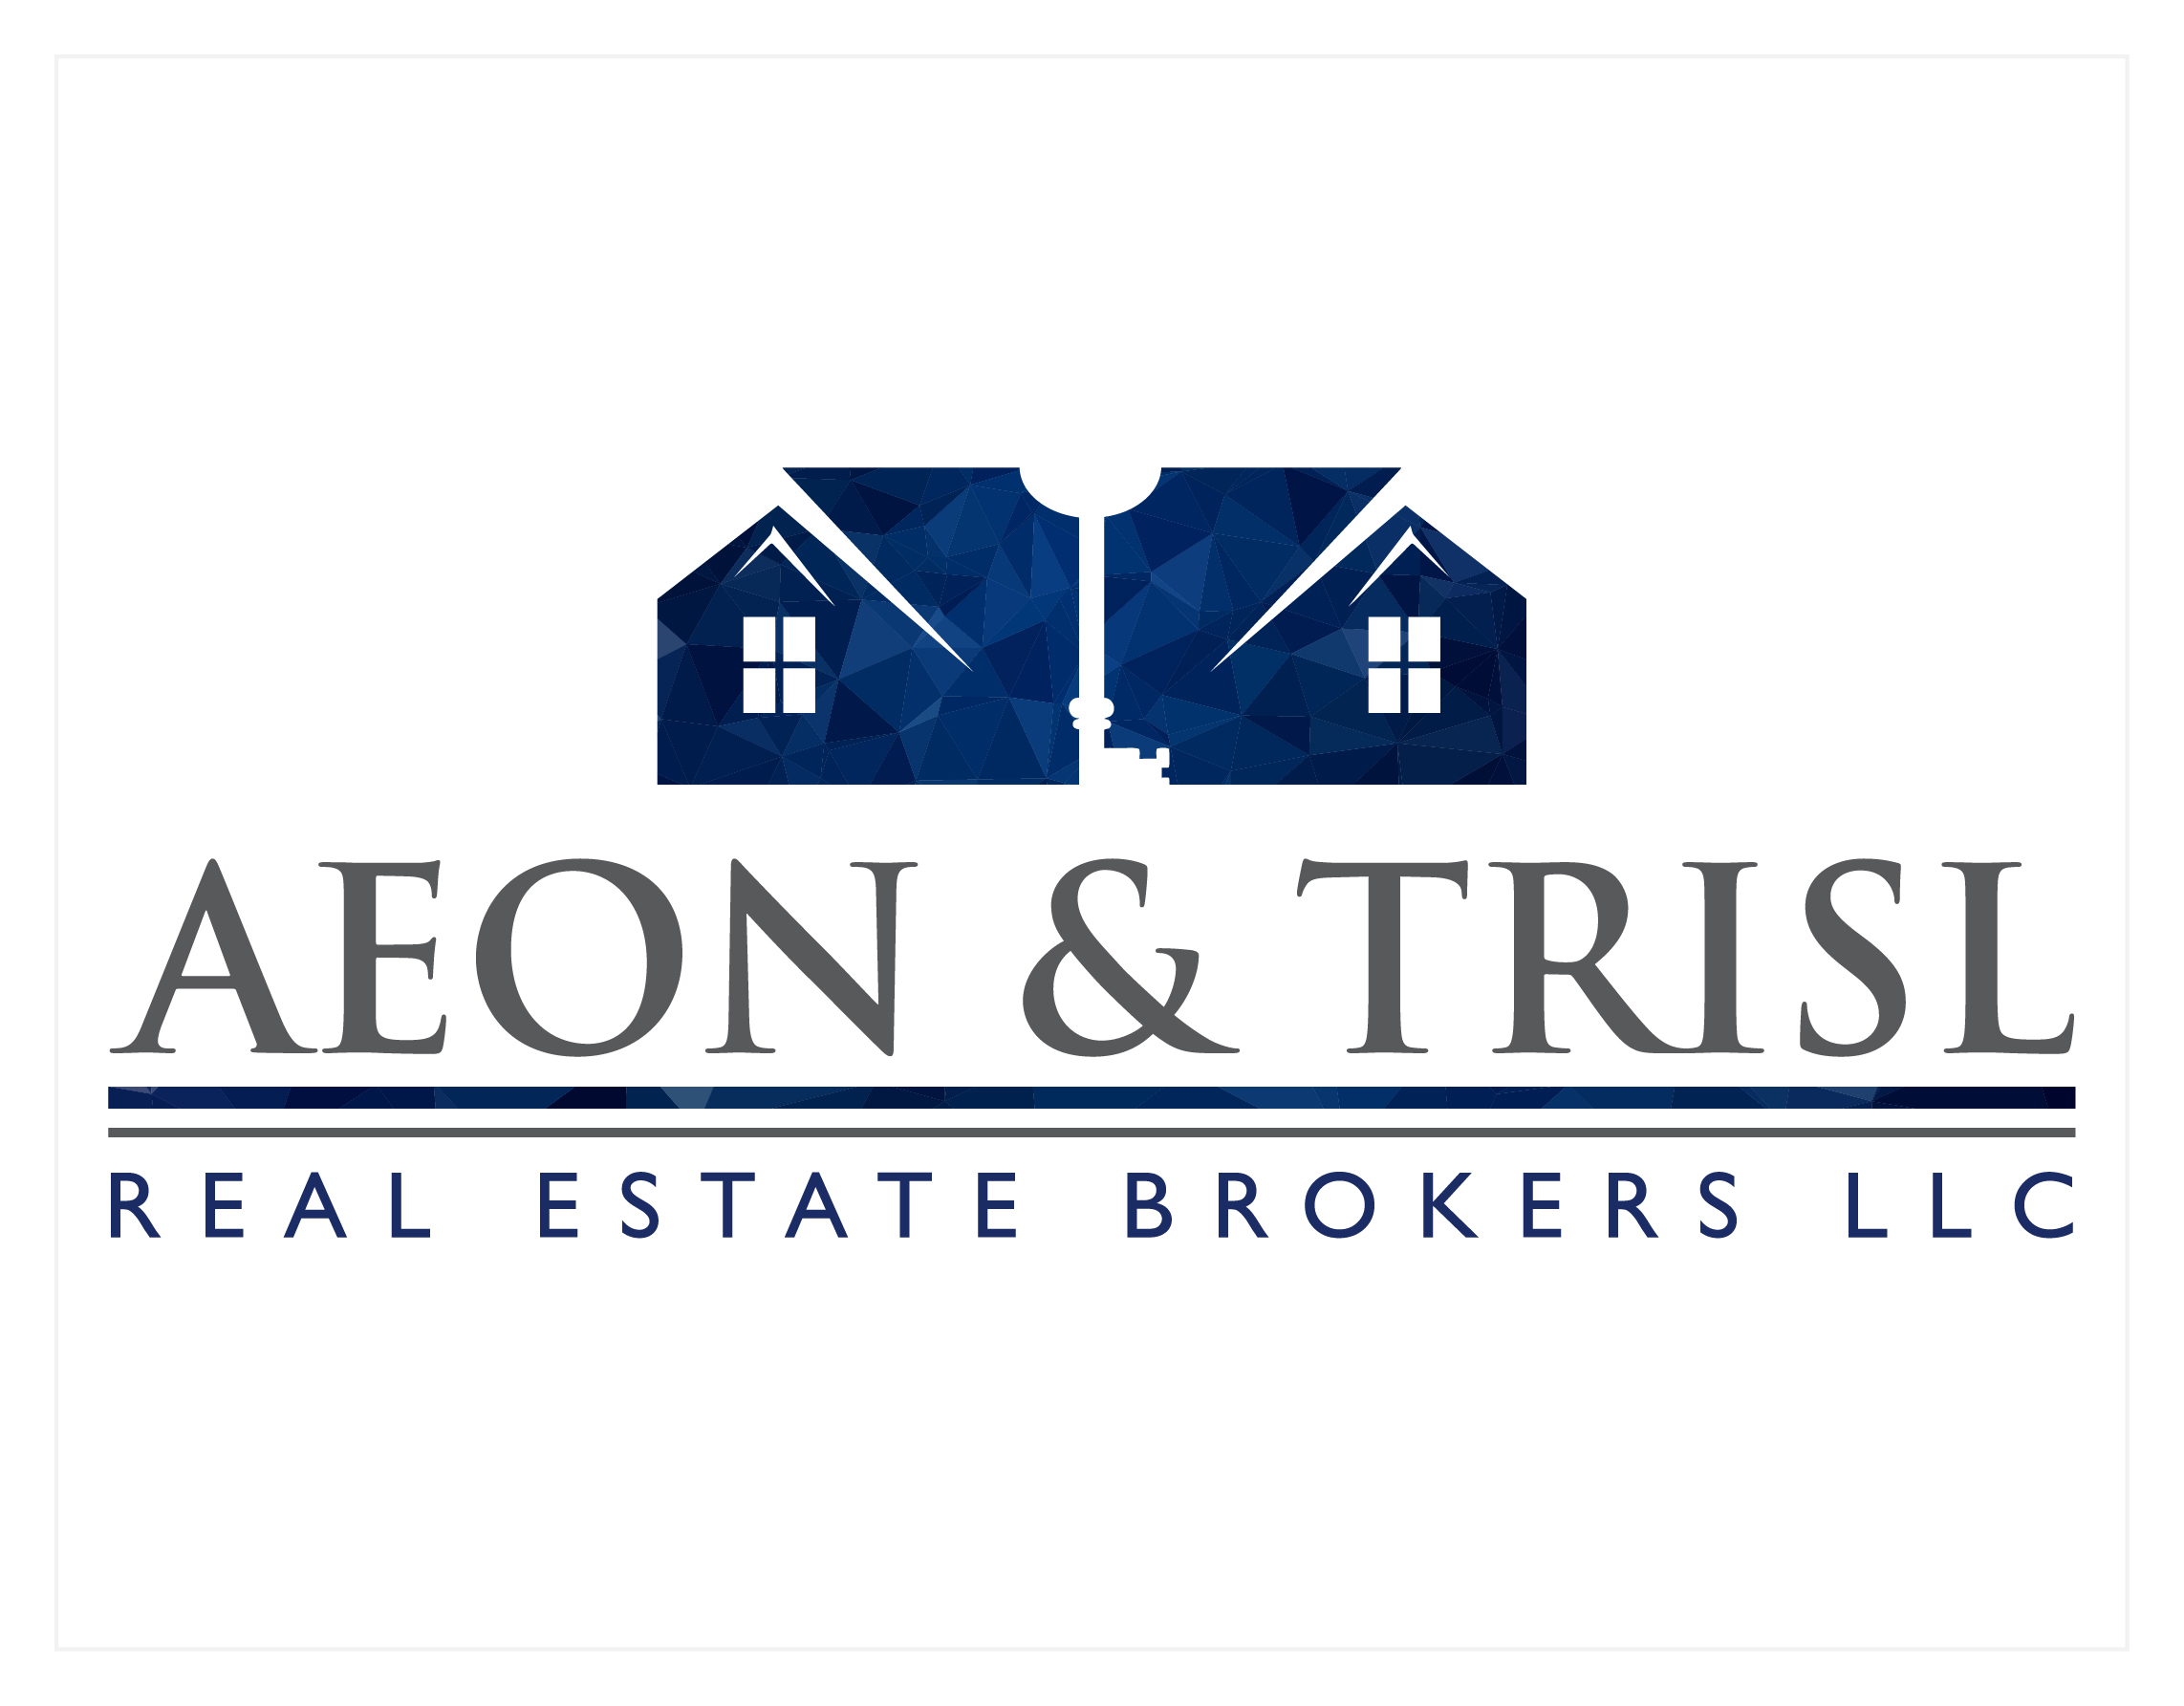 Aeon & Trisl Real Estate